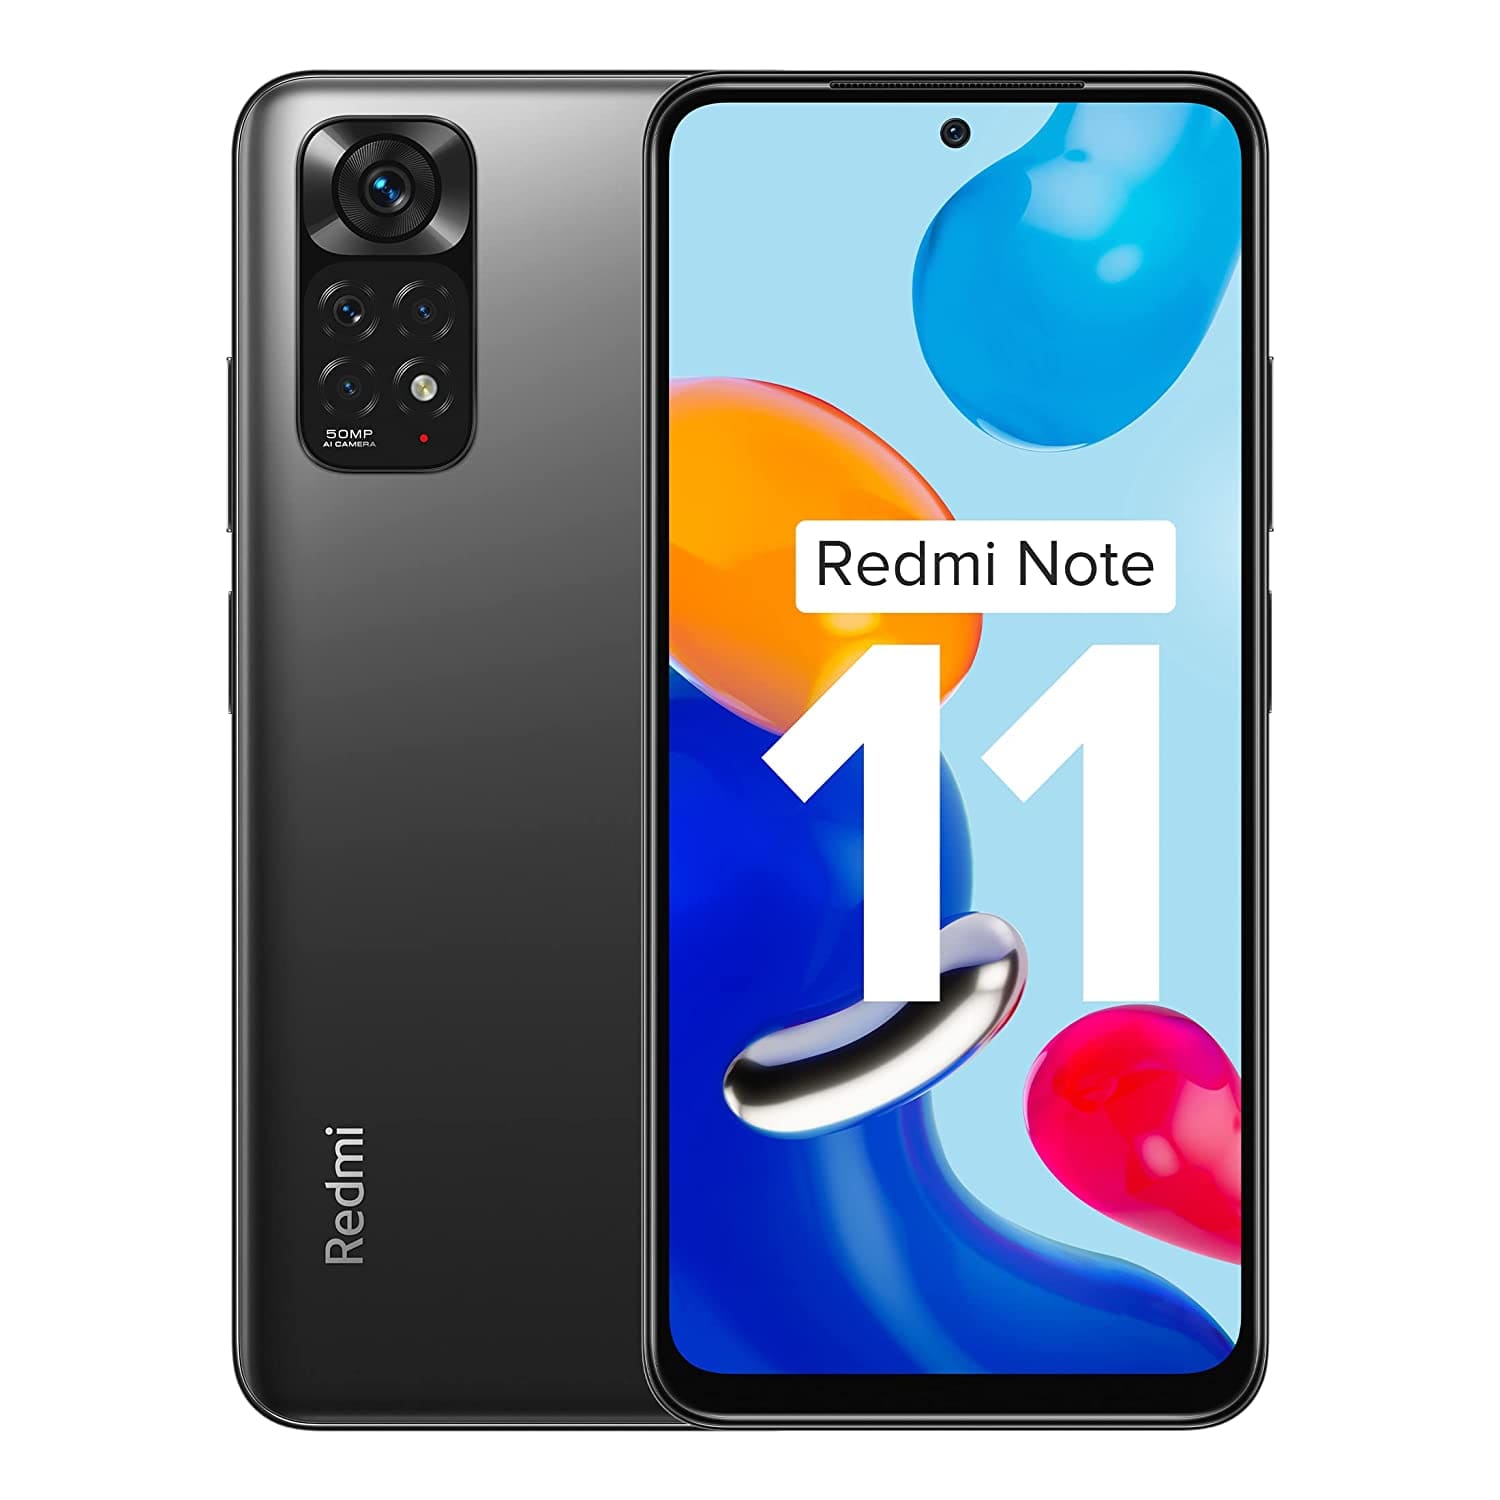 Redmi Note 11 is one of the best smartphones under 15000